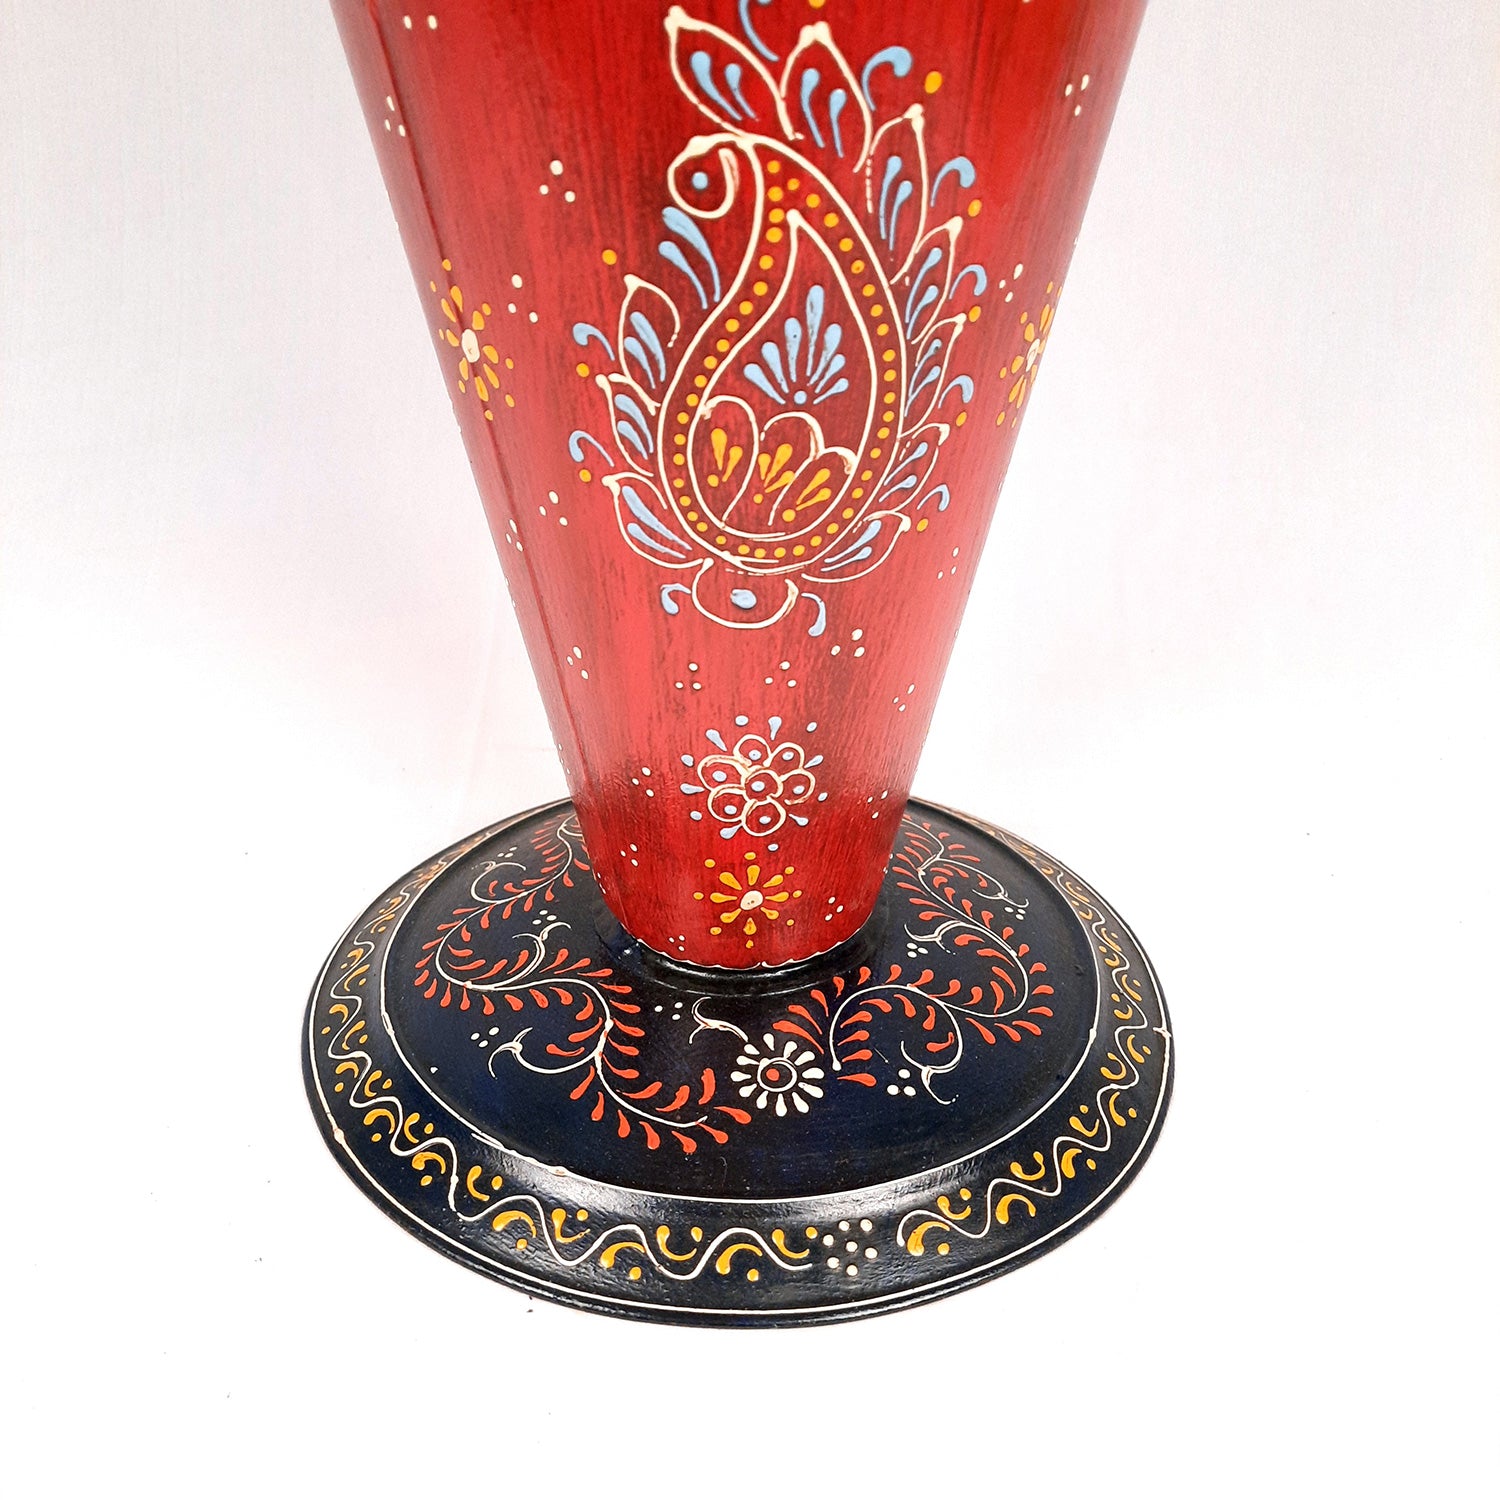 Flower Pot | Decorative Vases - For Home & Table decor - 31 Inch- Apkamart